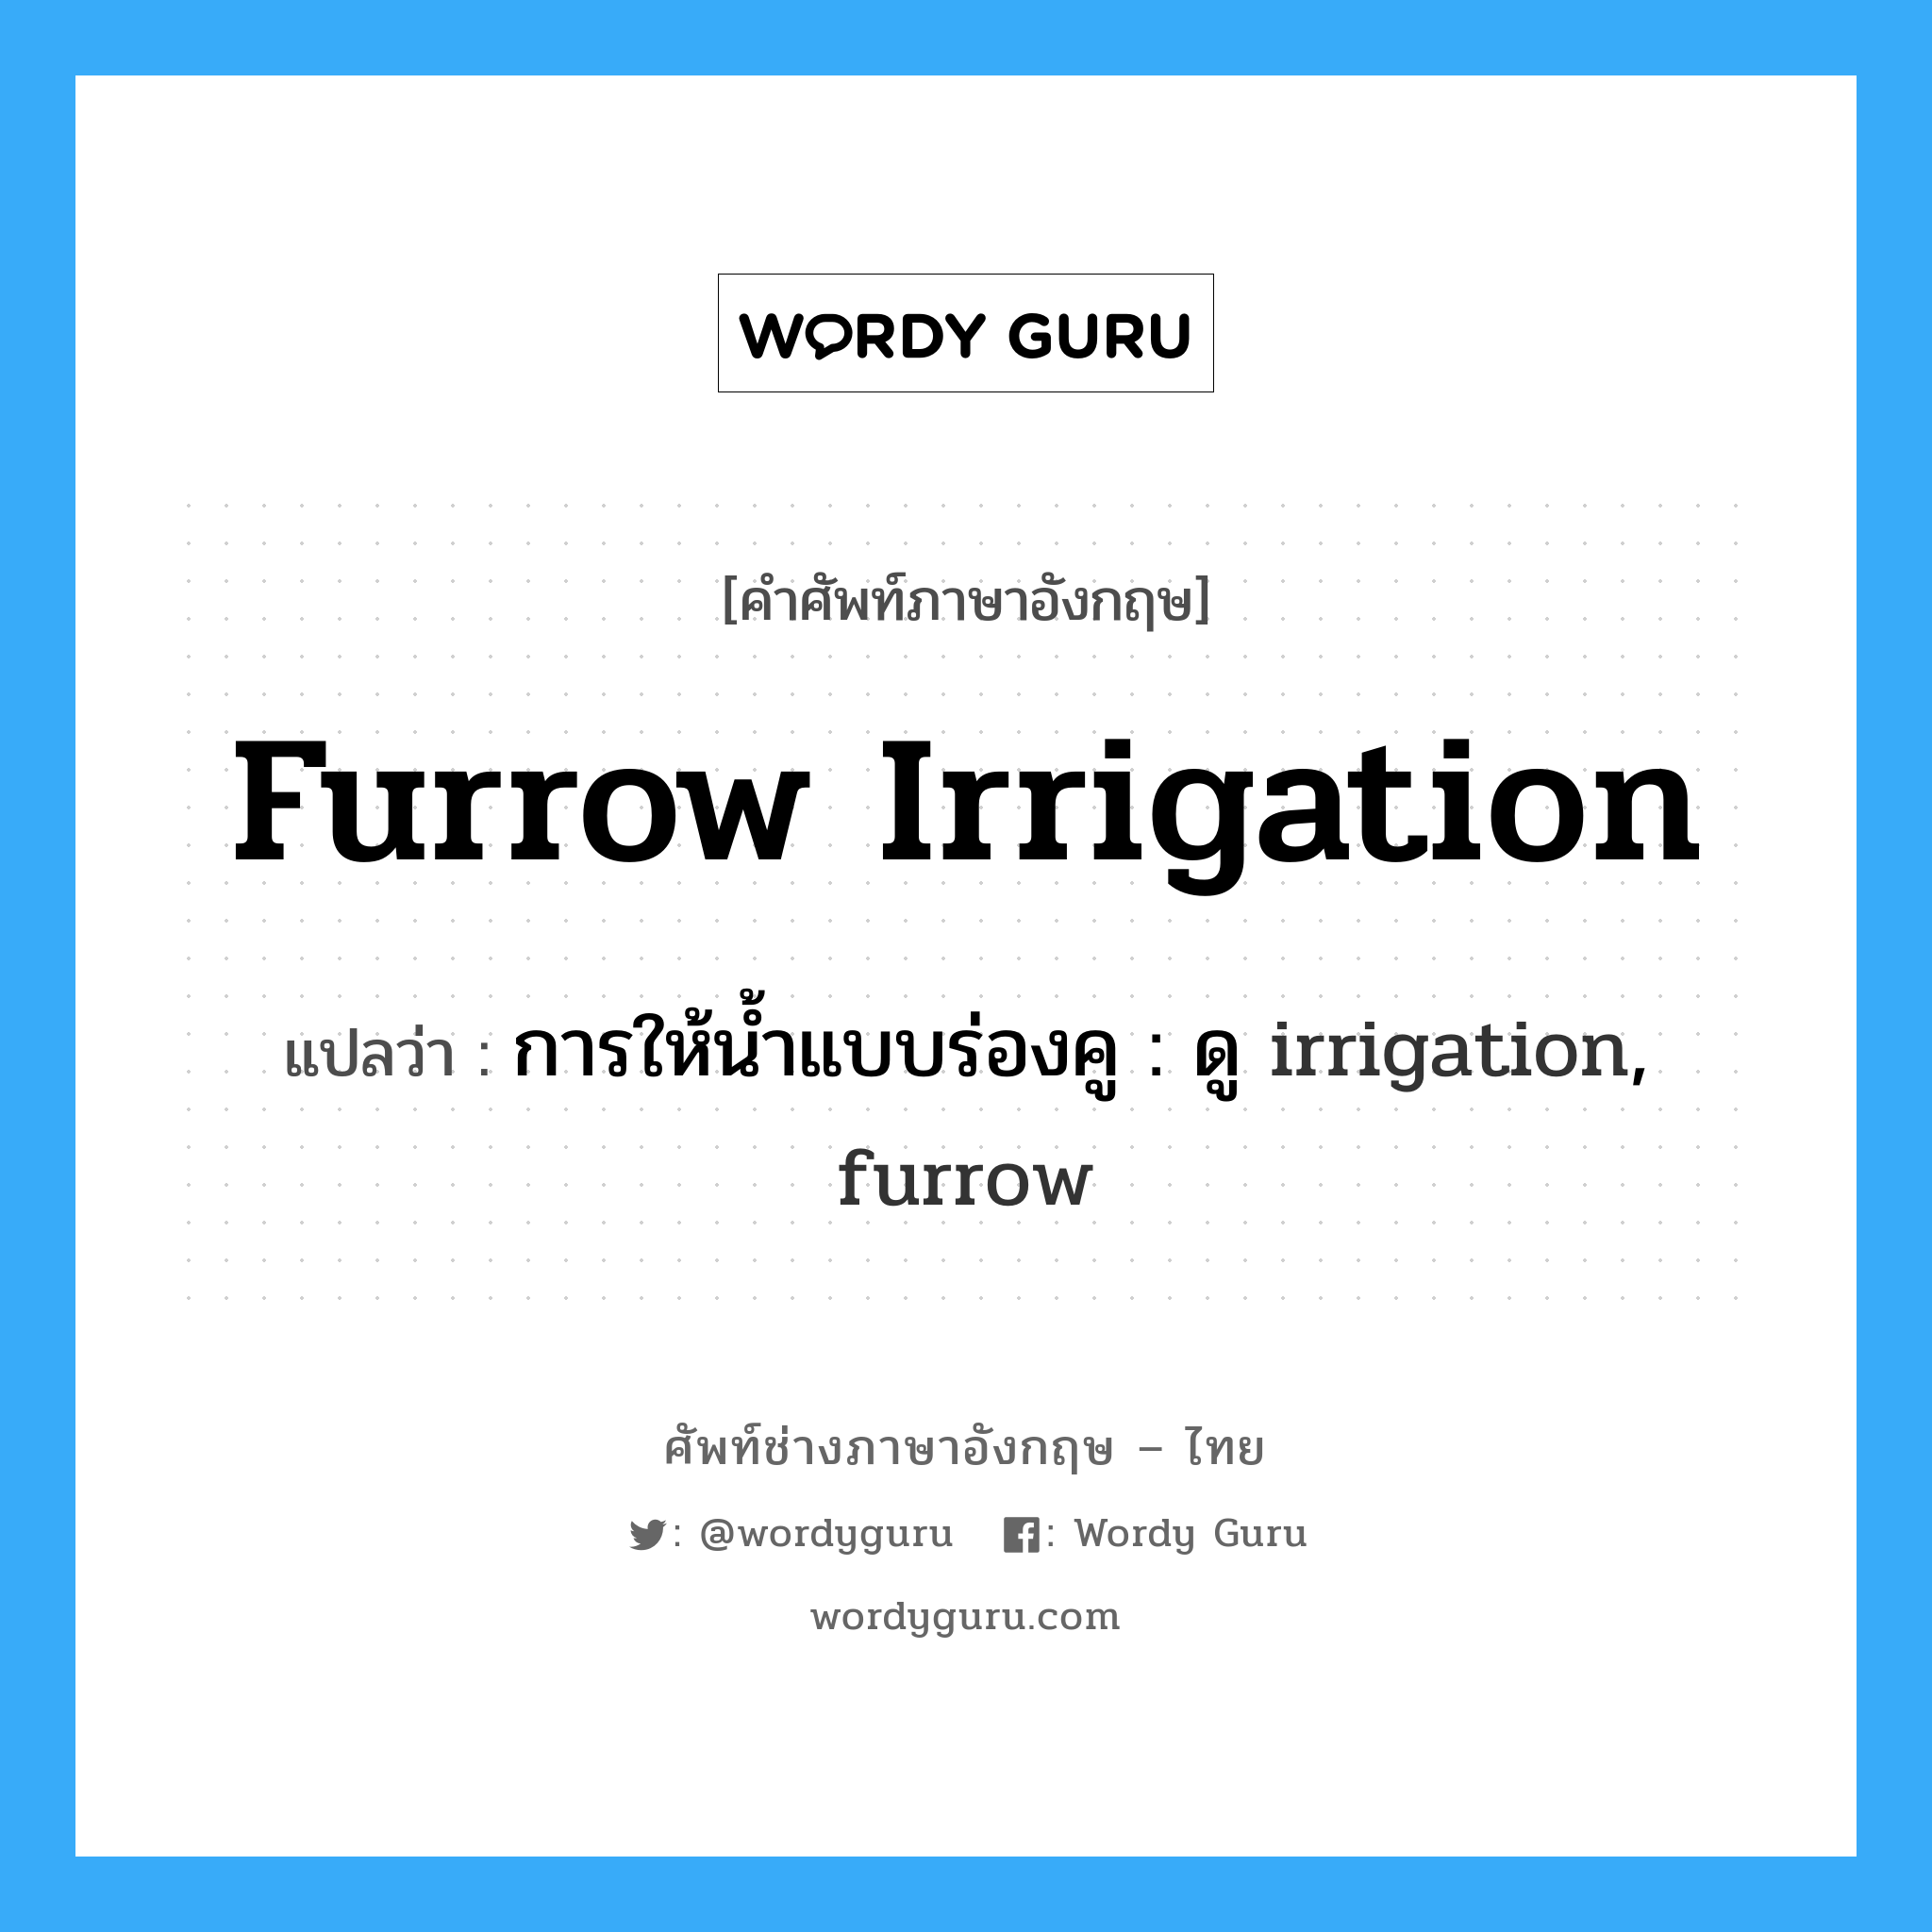 furrow irrigation แปลว่า?, คำศัพท์ช่างภาษาอังกฤษ - ไทย furrow irrigation คำศัพท์ภาษาอังกฤษ furrow irrigation แปลว่า การให้น้ำแบบร่องคู : ดู irrigation, furrow